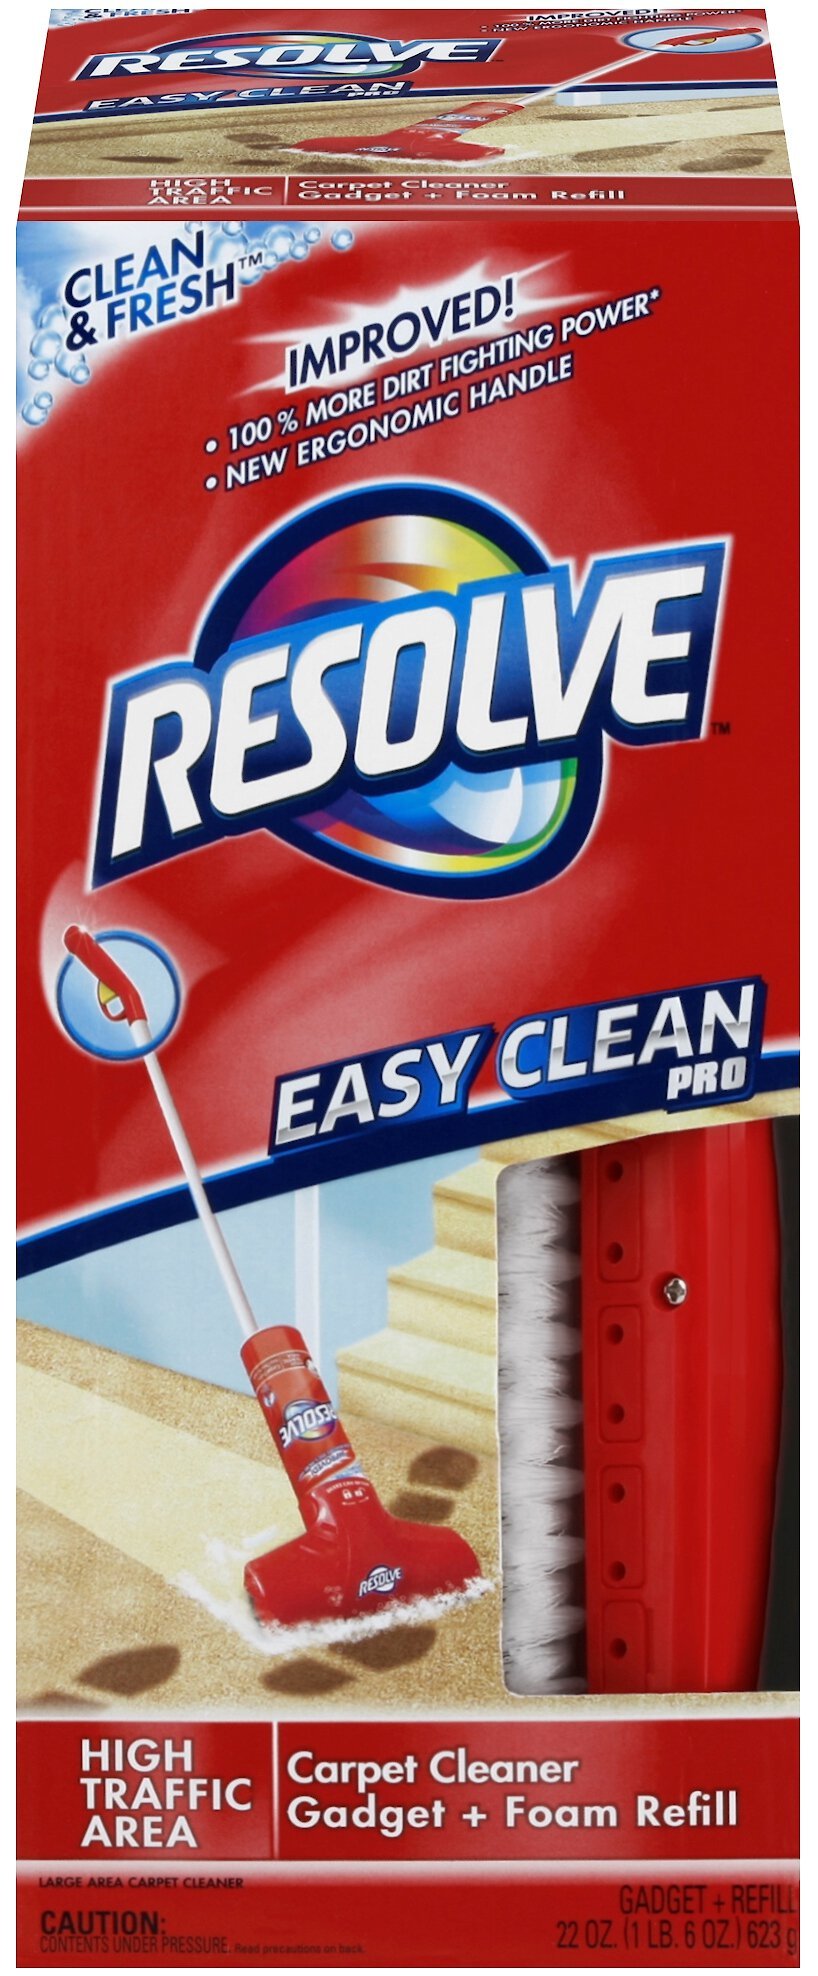 Resolve Carpet Cleaner, Large Area, High Traffic, Foam, Value Pack - 2 pack, 22 oz